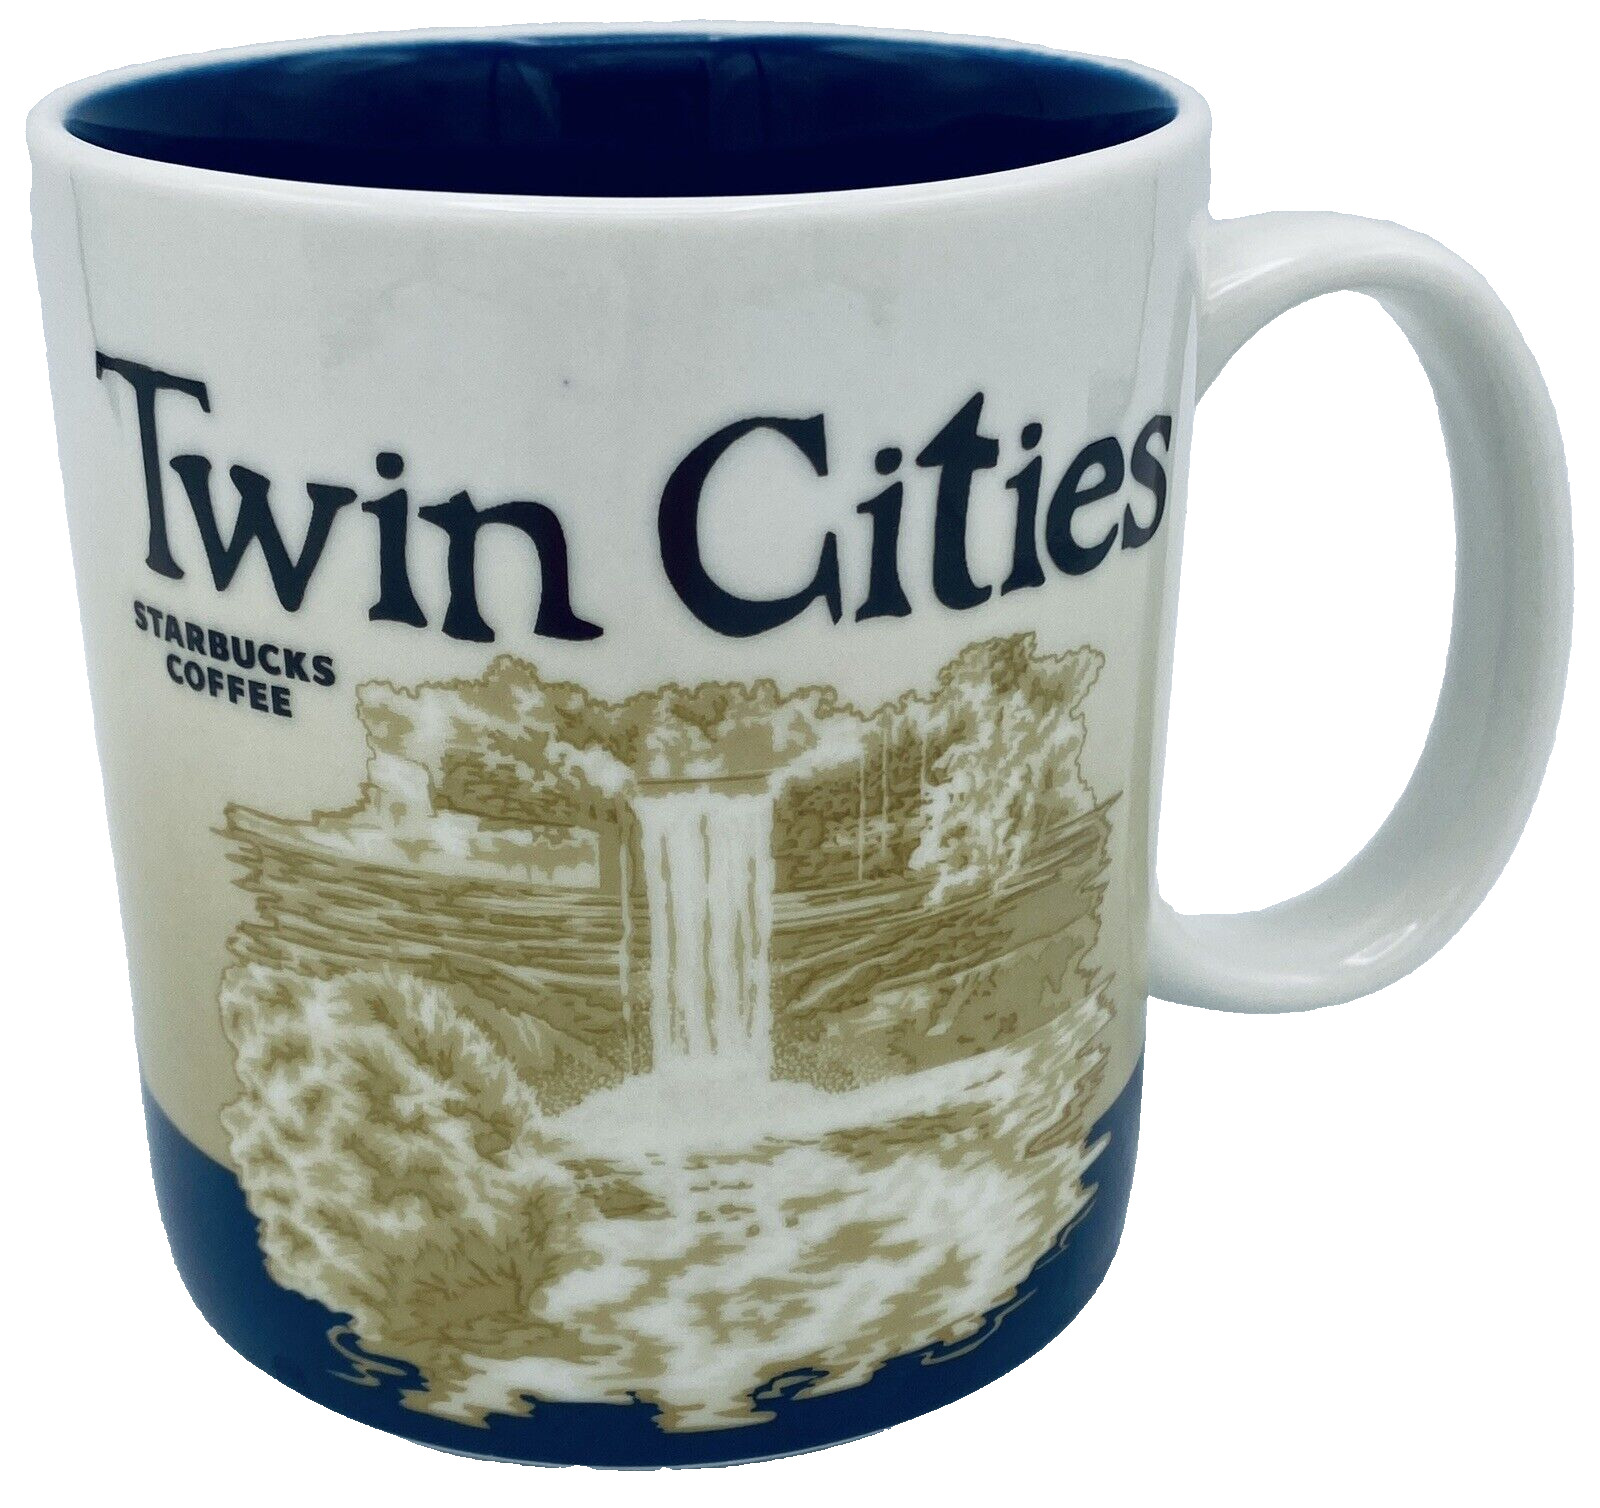 Starbucks Twin Cities Coffee Tea Mug 16oz w Handle Tan and Blue Mint Collector’s